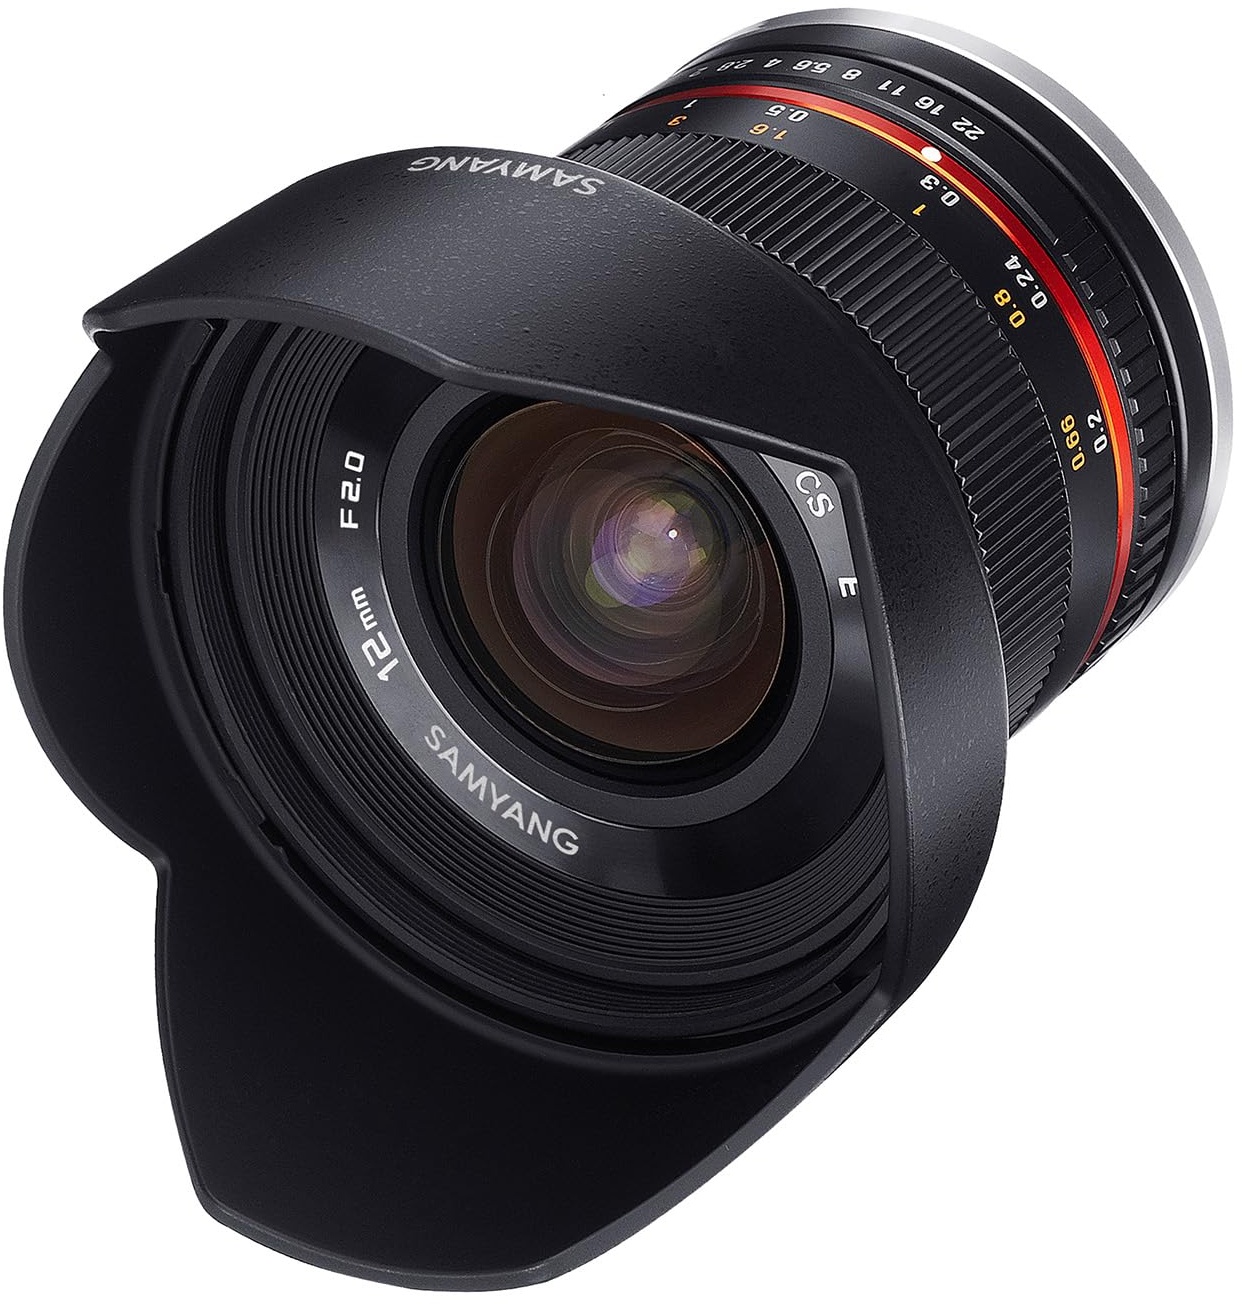 Samyang 12mm F2.0 Weitwinkel Objektiv Festbrennweite manueller Fokus Foto Objektiv für Sony E-Mount APS-C Kameras Sony Alpha 6600 6500 6400 6300 6100 6000 5100 5000 schwarz